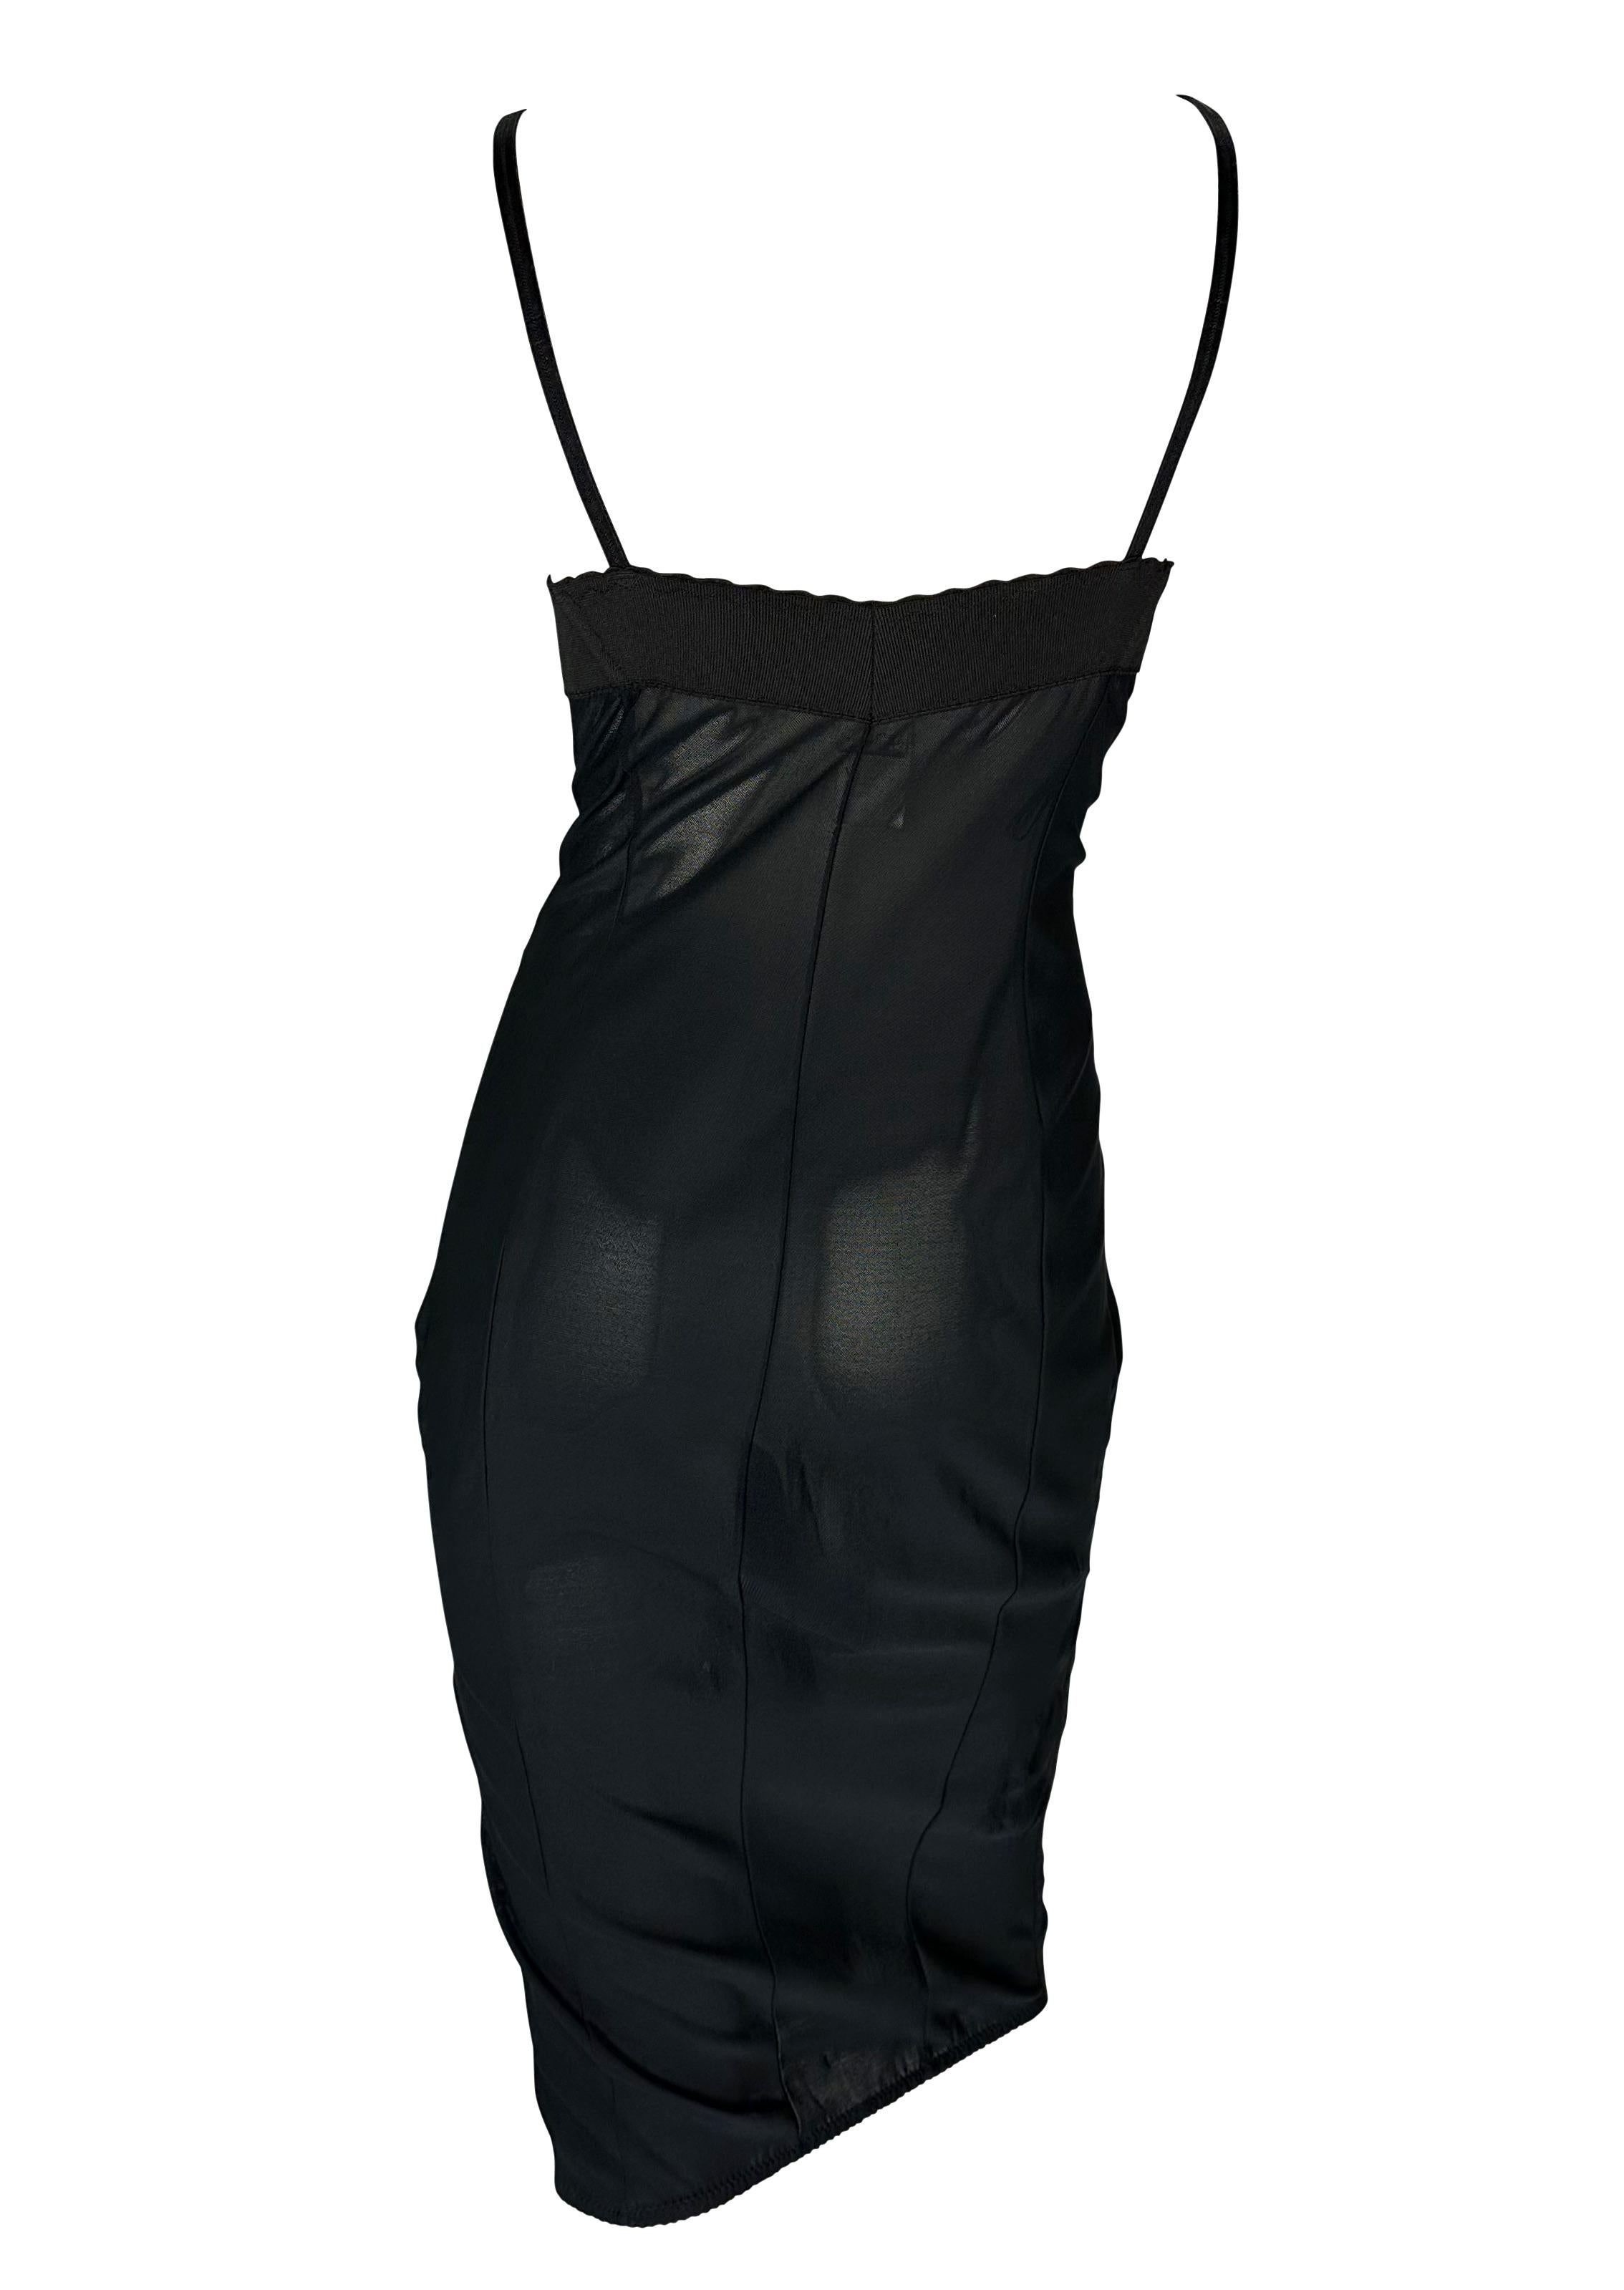 S/S 2003 Dolce & Gabbana 'Sex & Love' Runway Sheer Bustier Black Dress For Sale 2